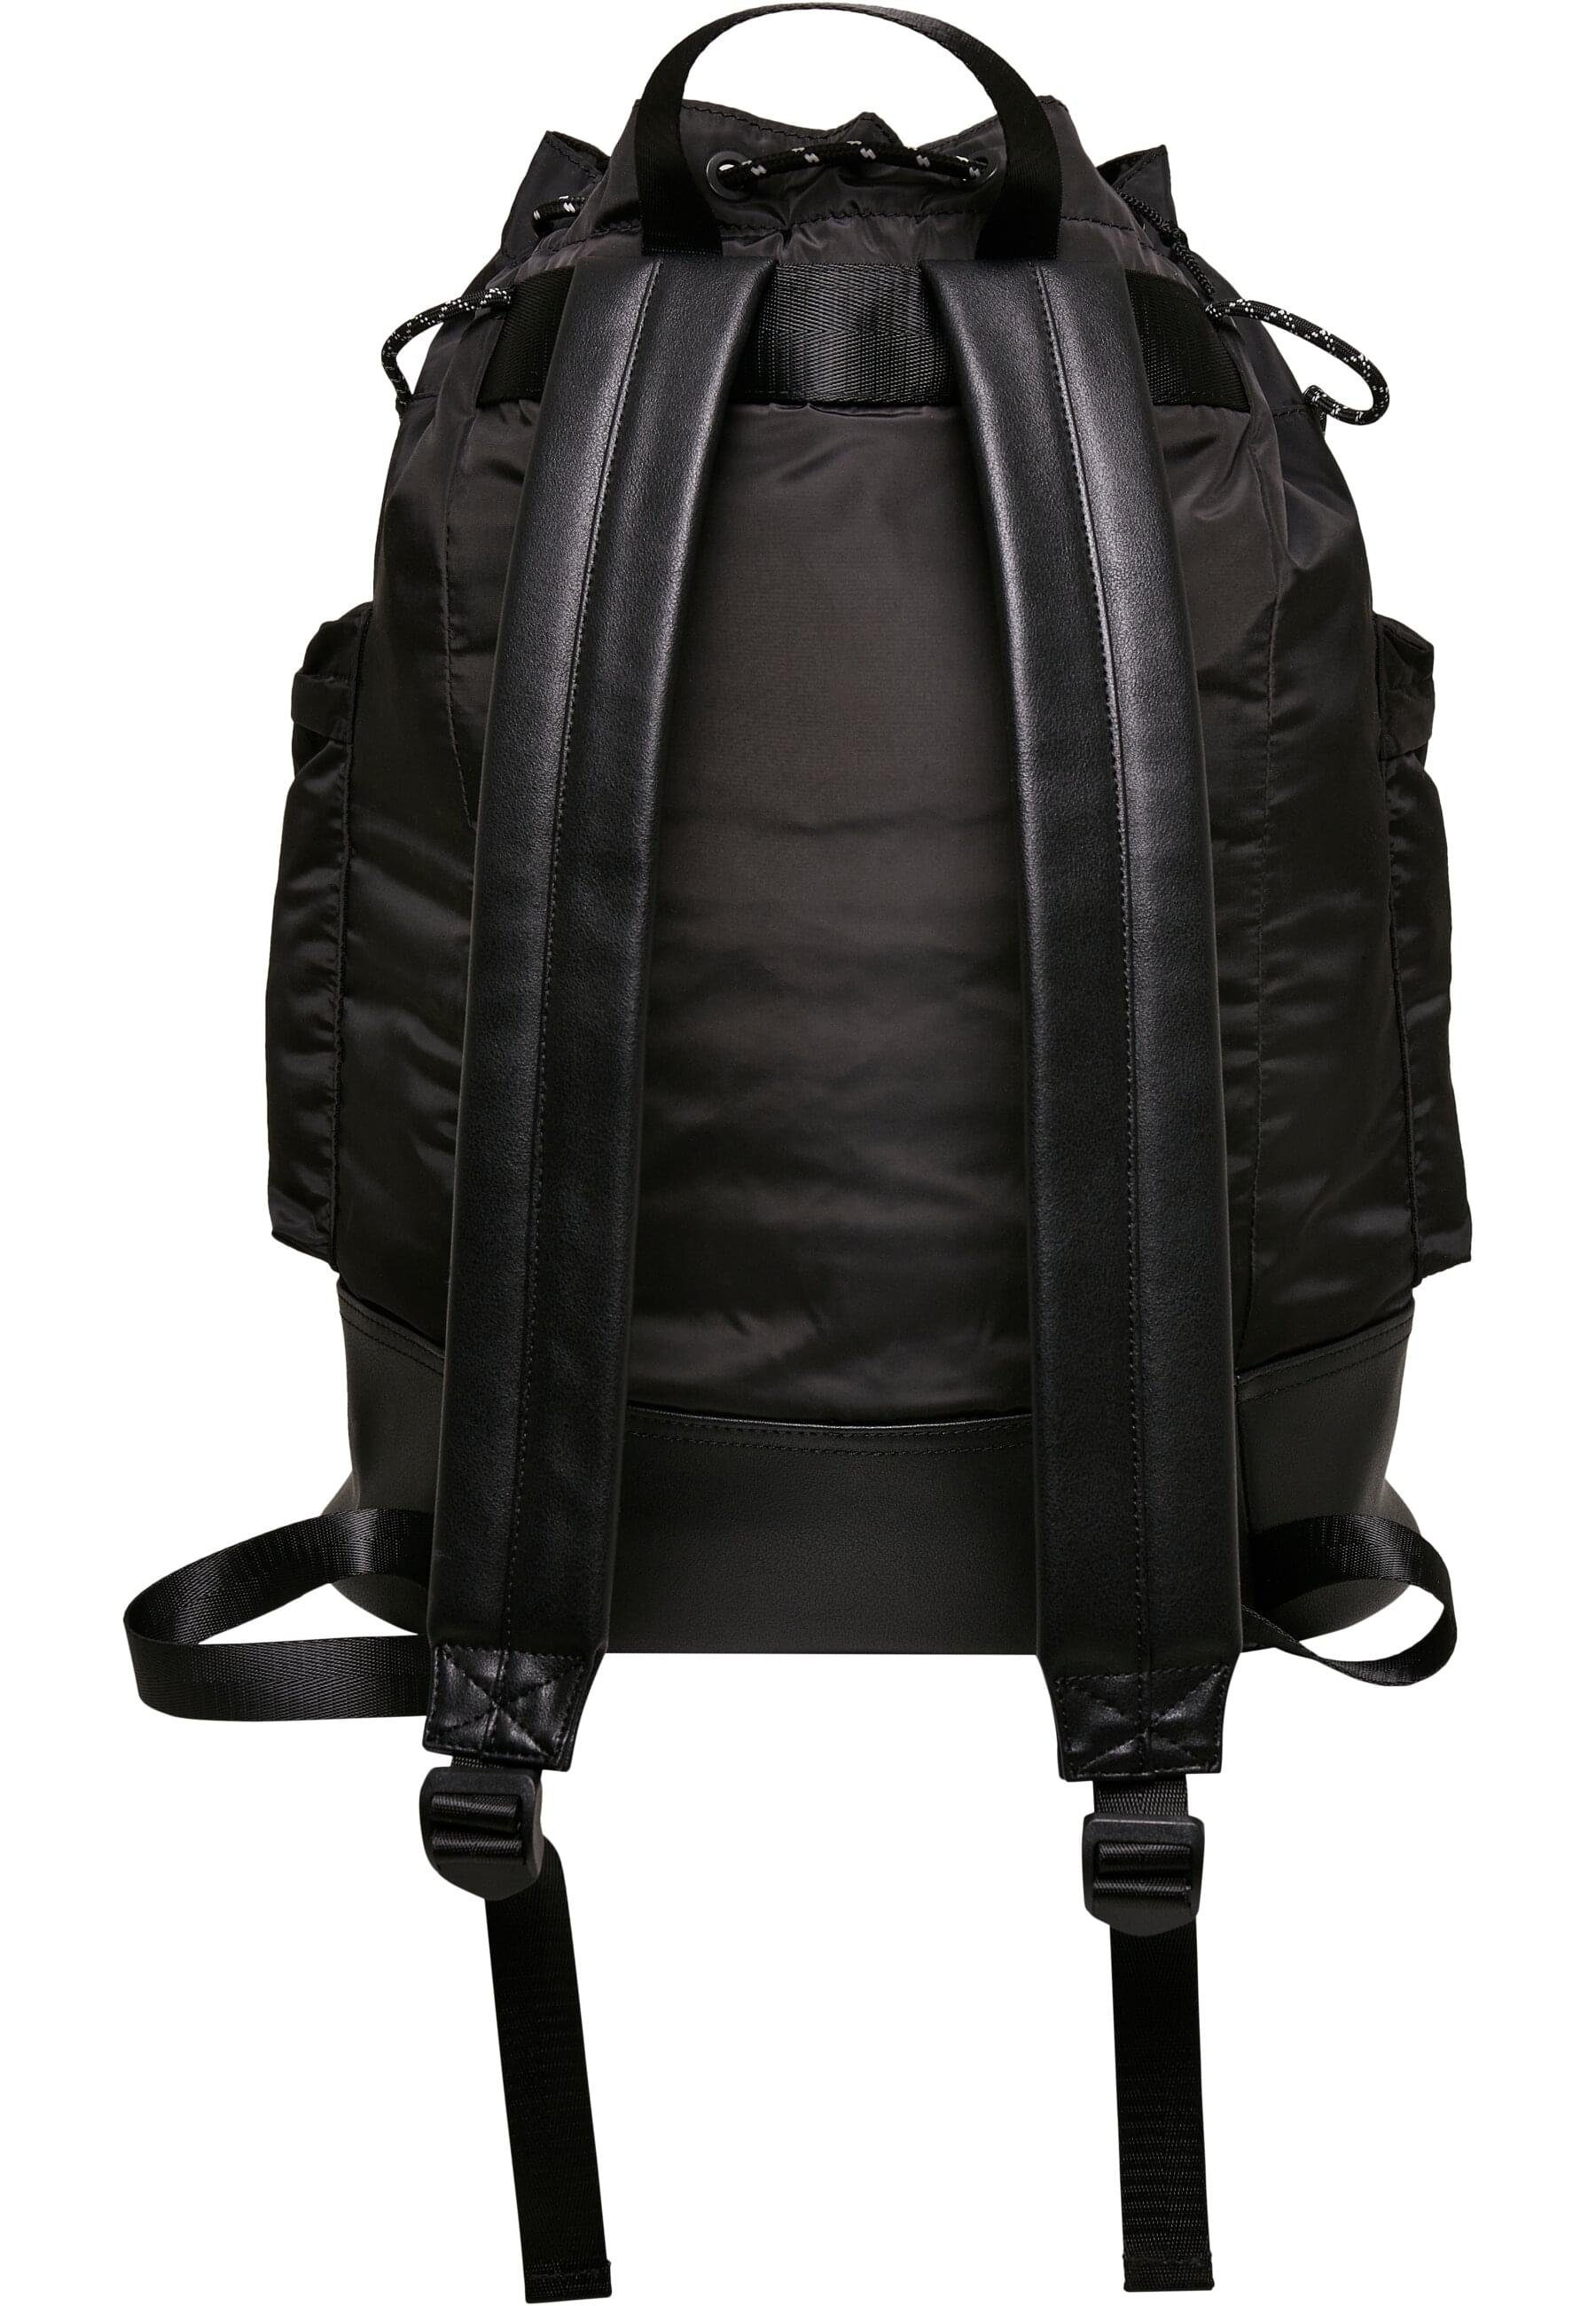 Unisex Rucksack Light Hiking URBAN Weight Backpack CLASSICS